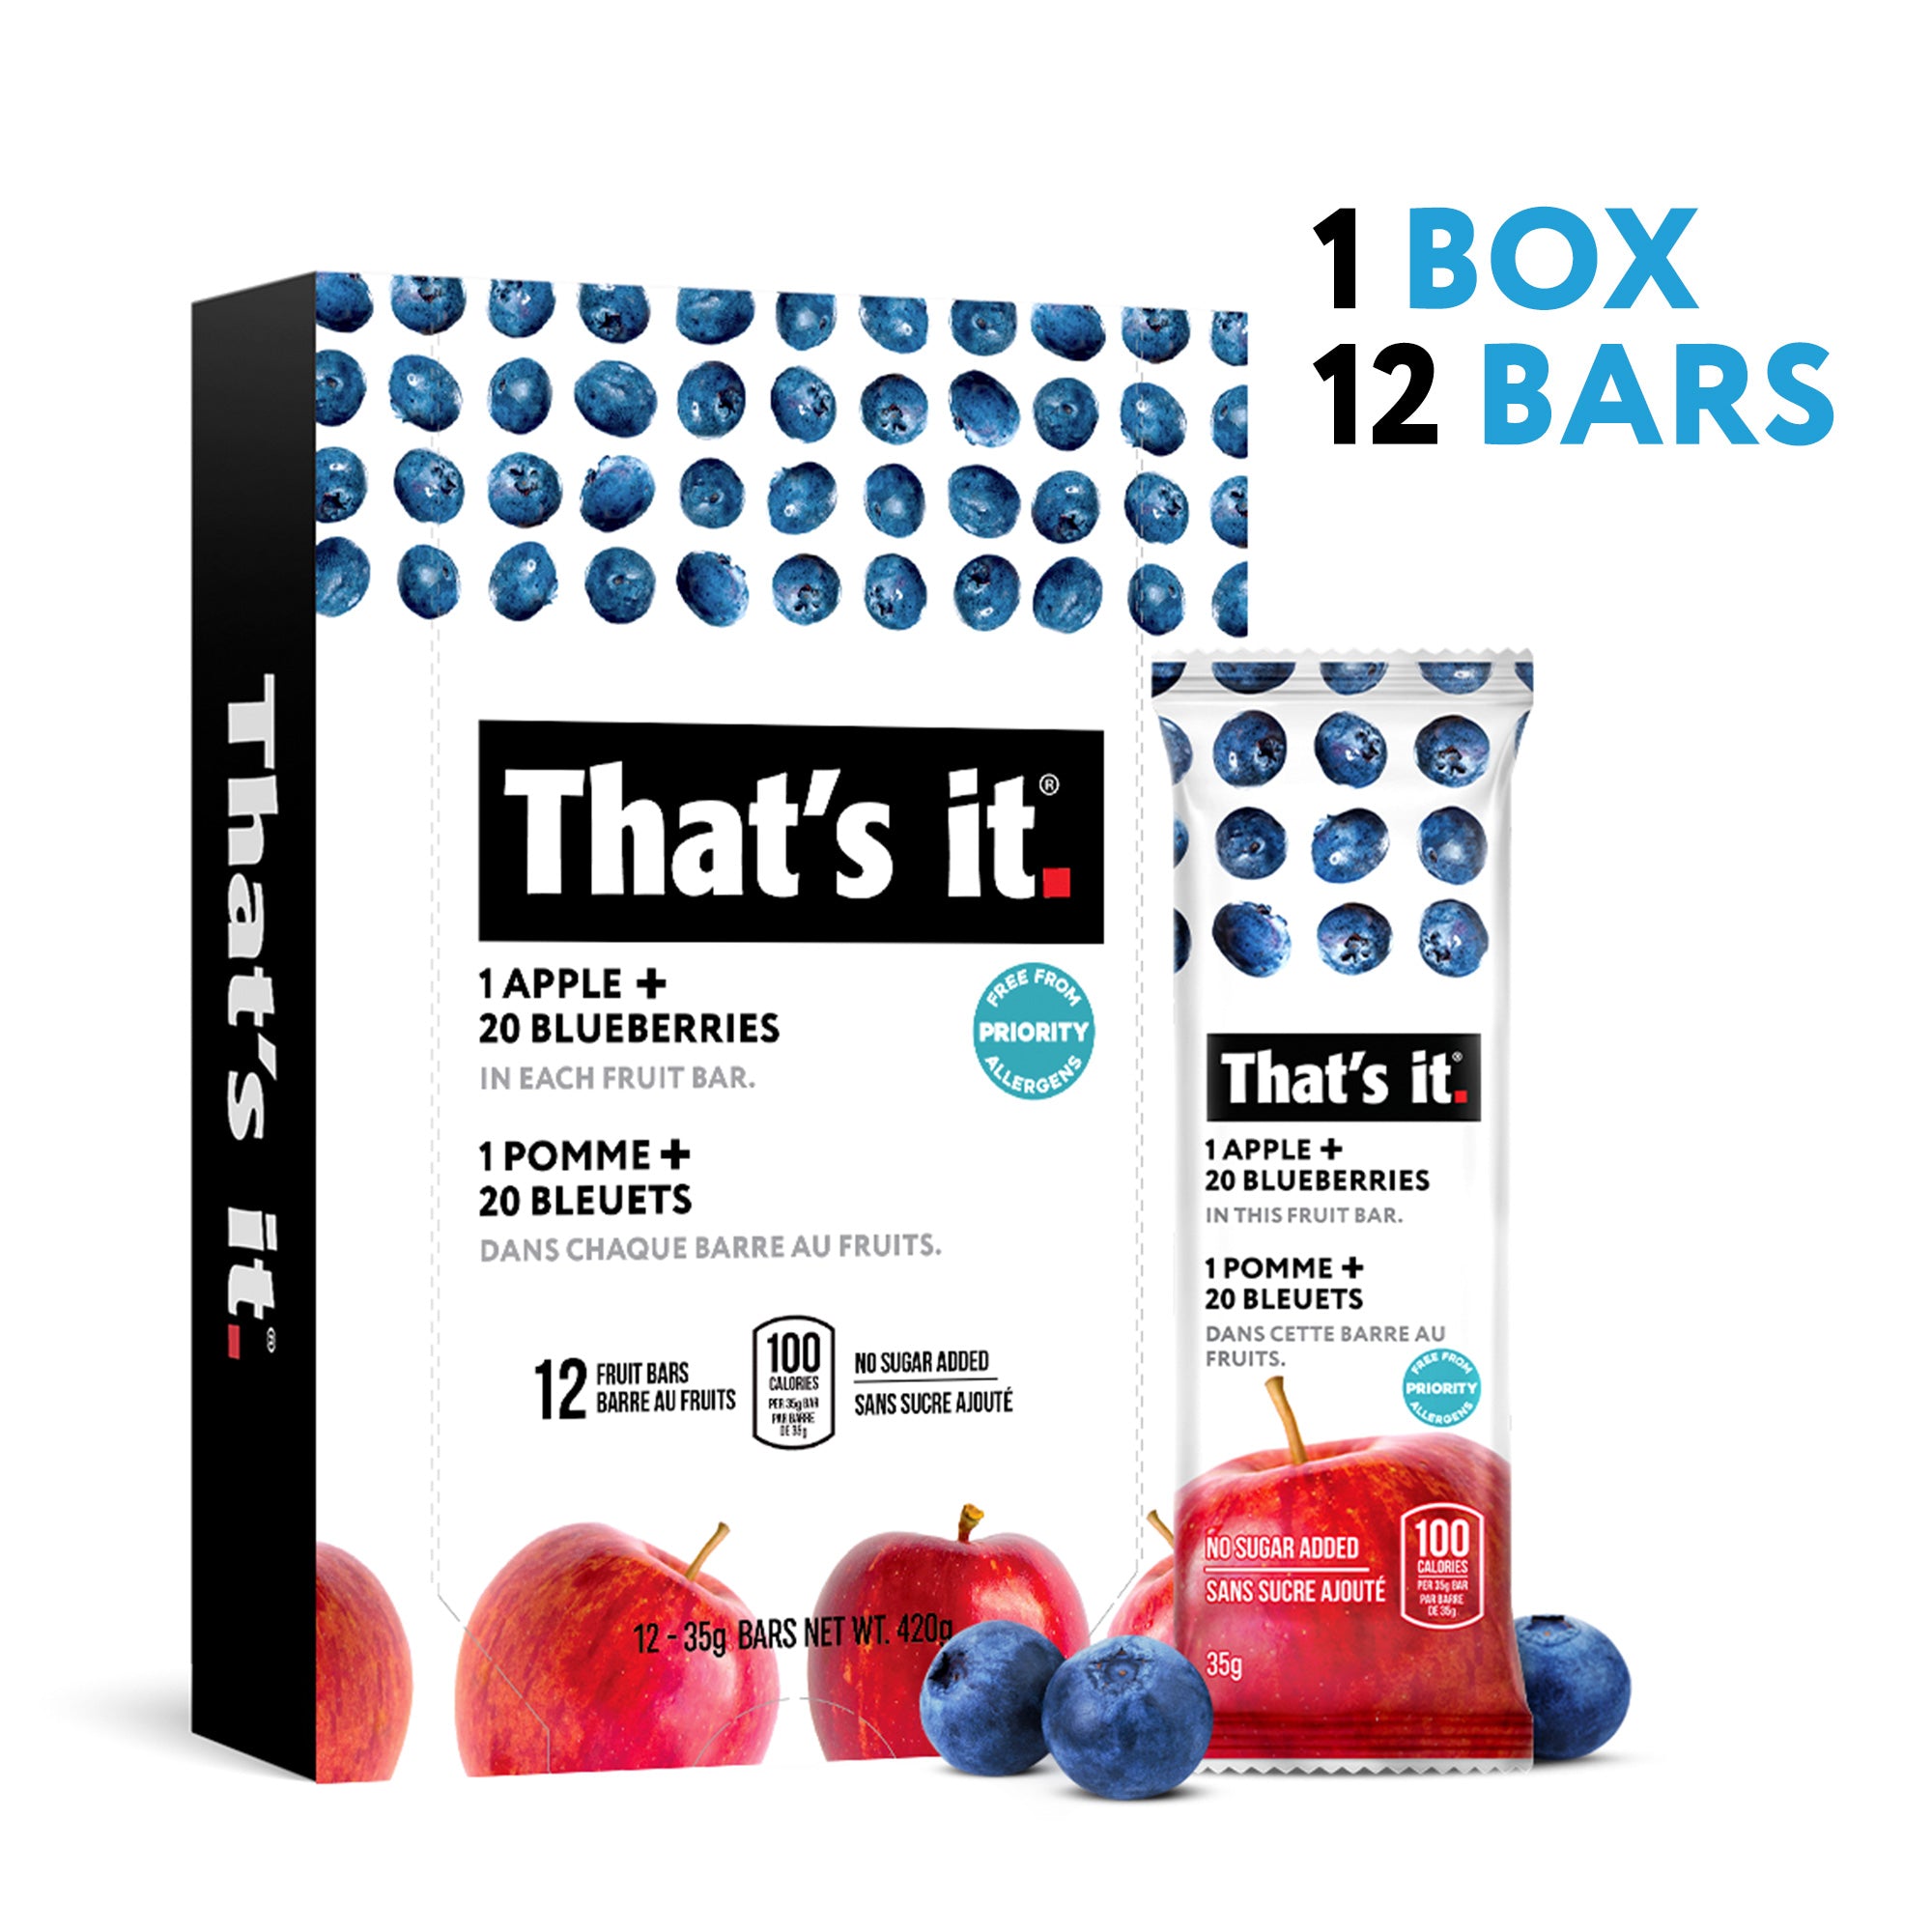 1 box 12 bars - 12ct box apple = blueberry fruit bars